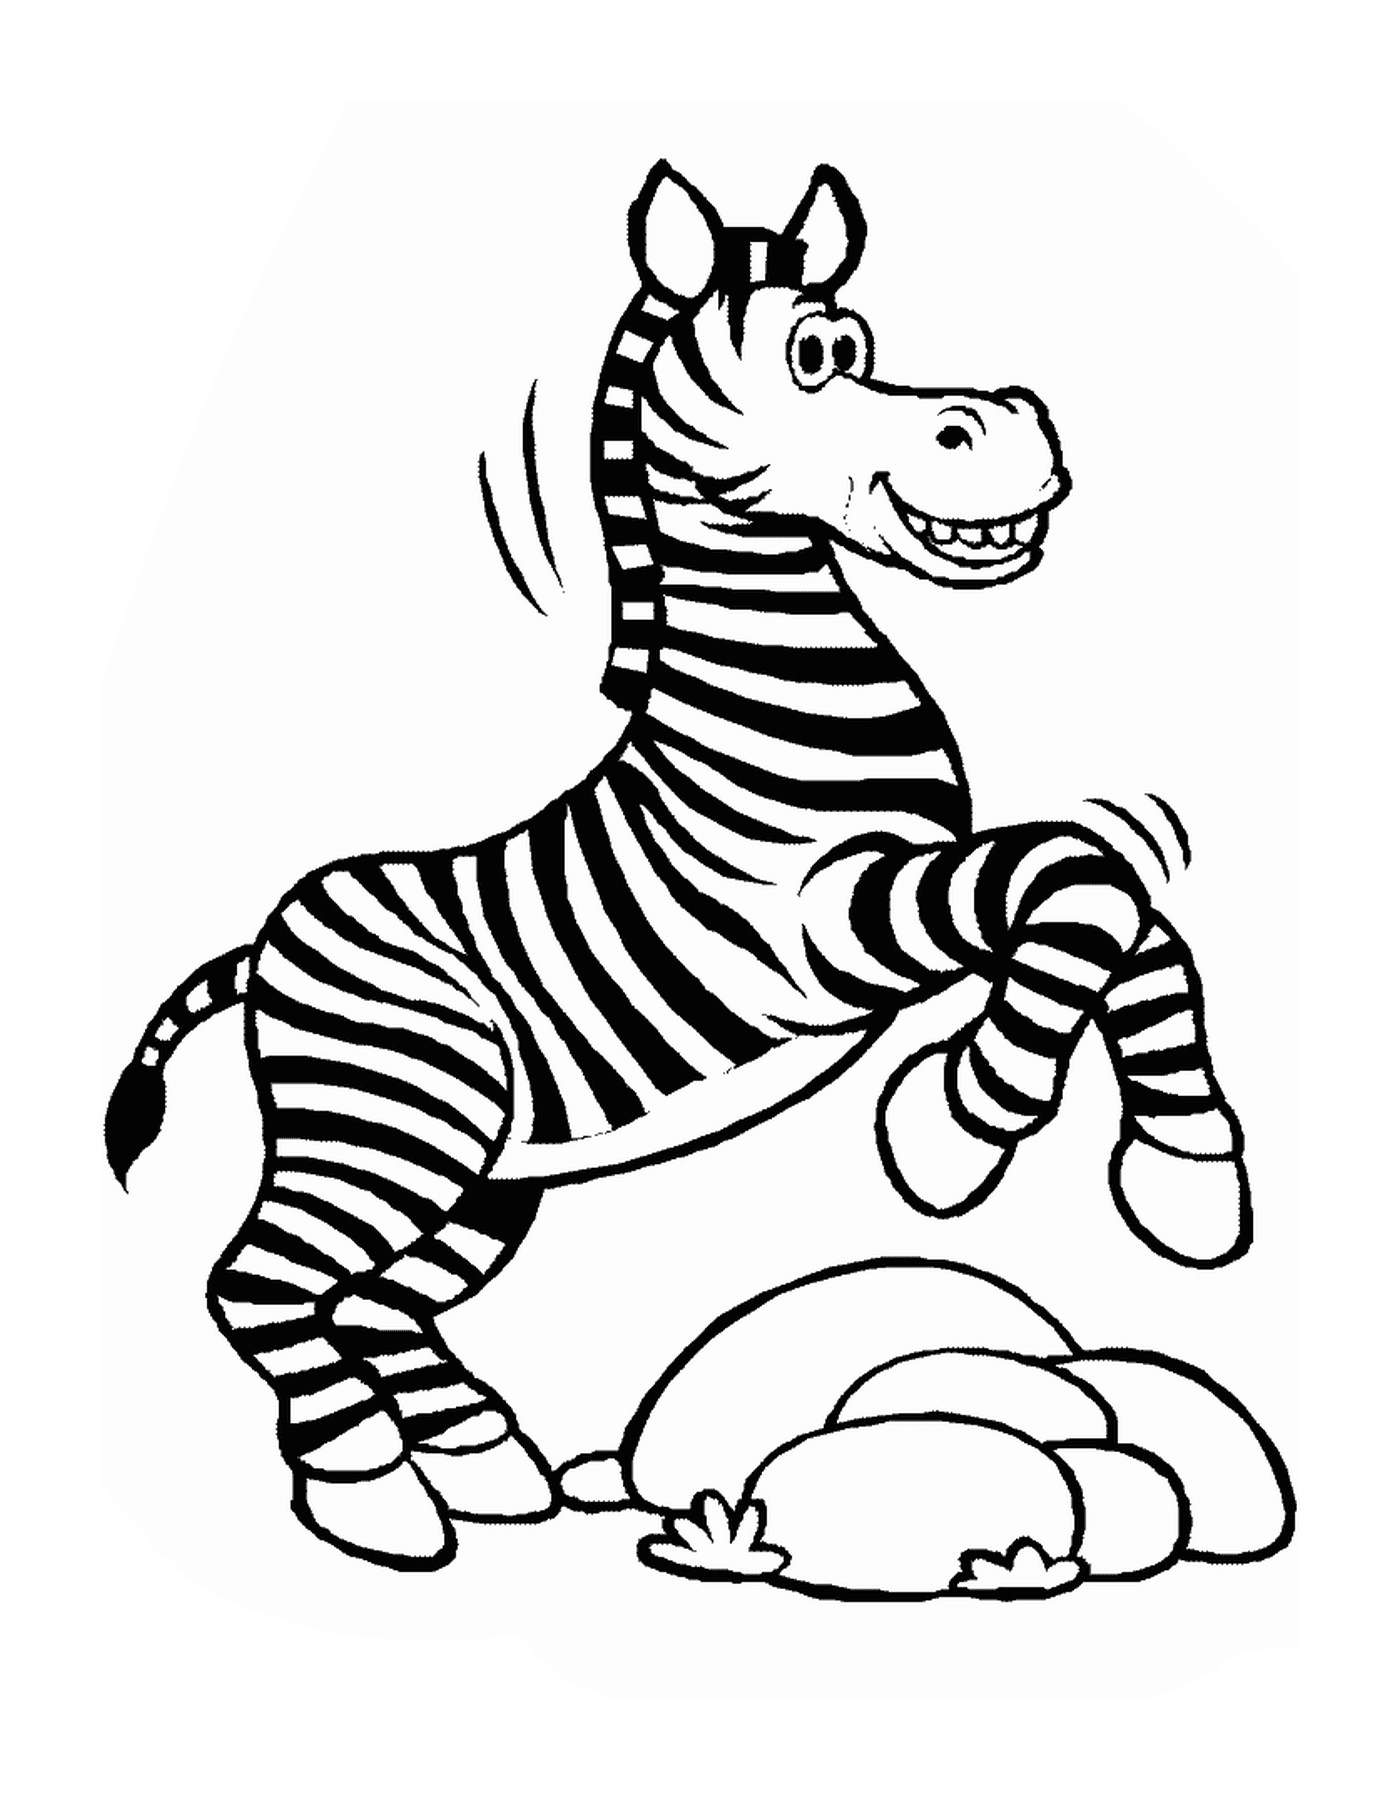  Zebra saltare in aria 